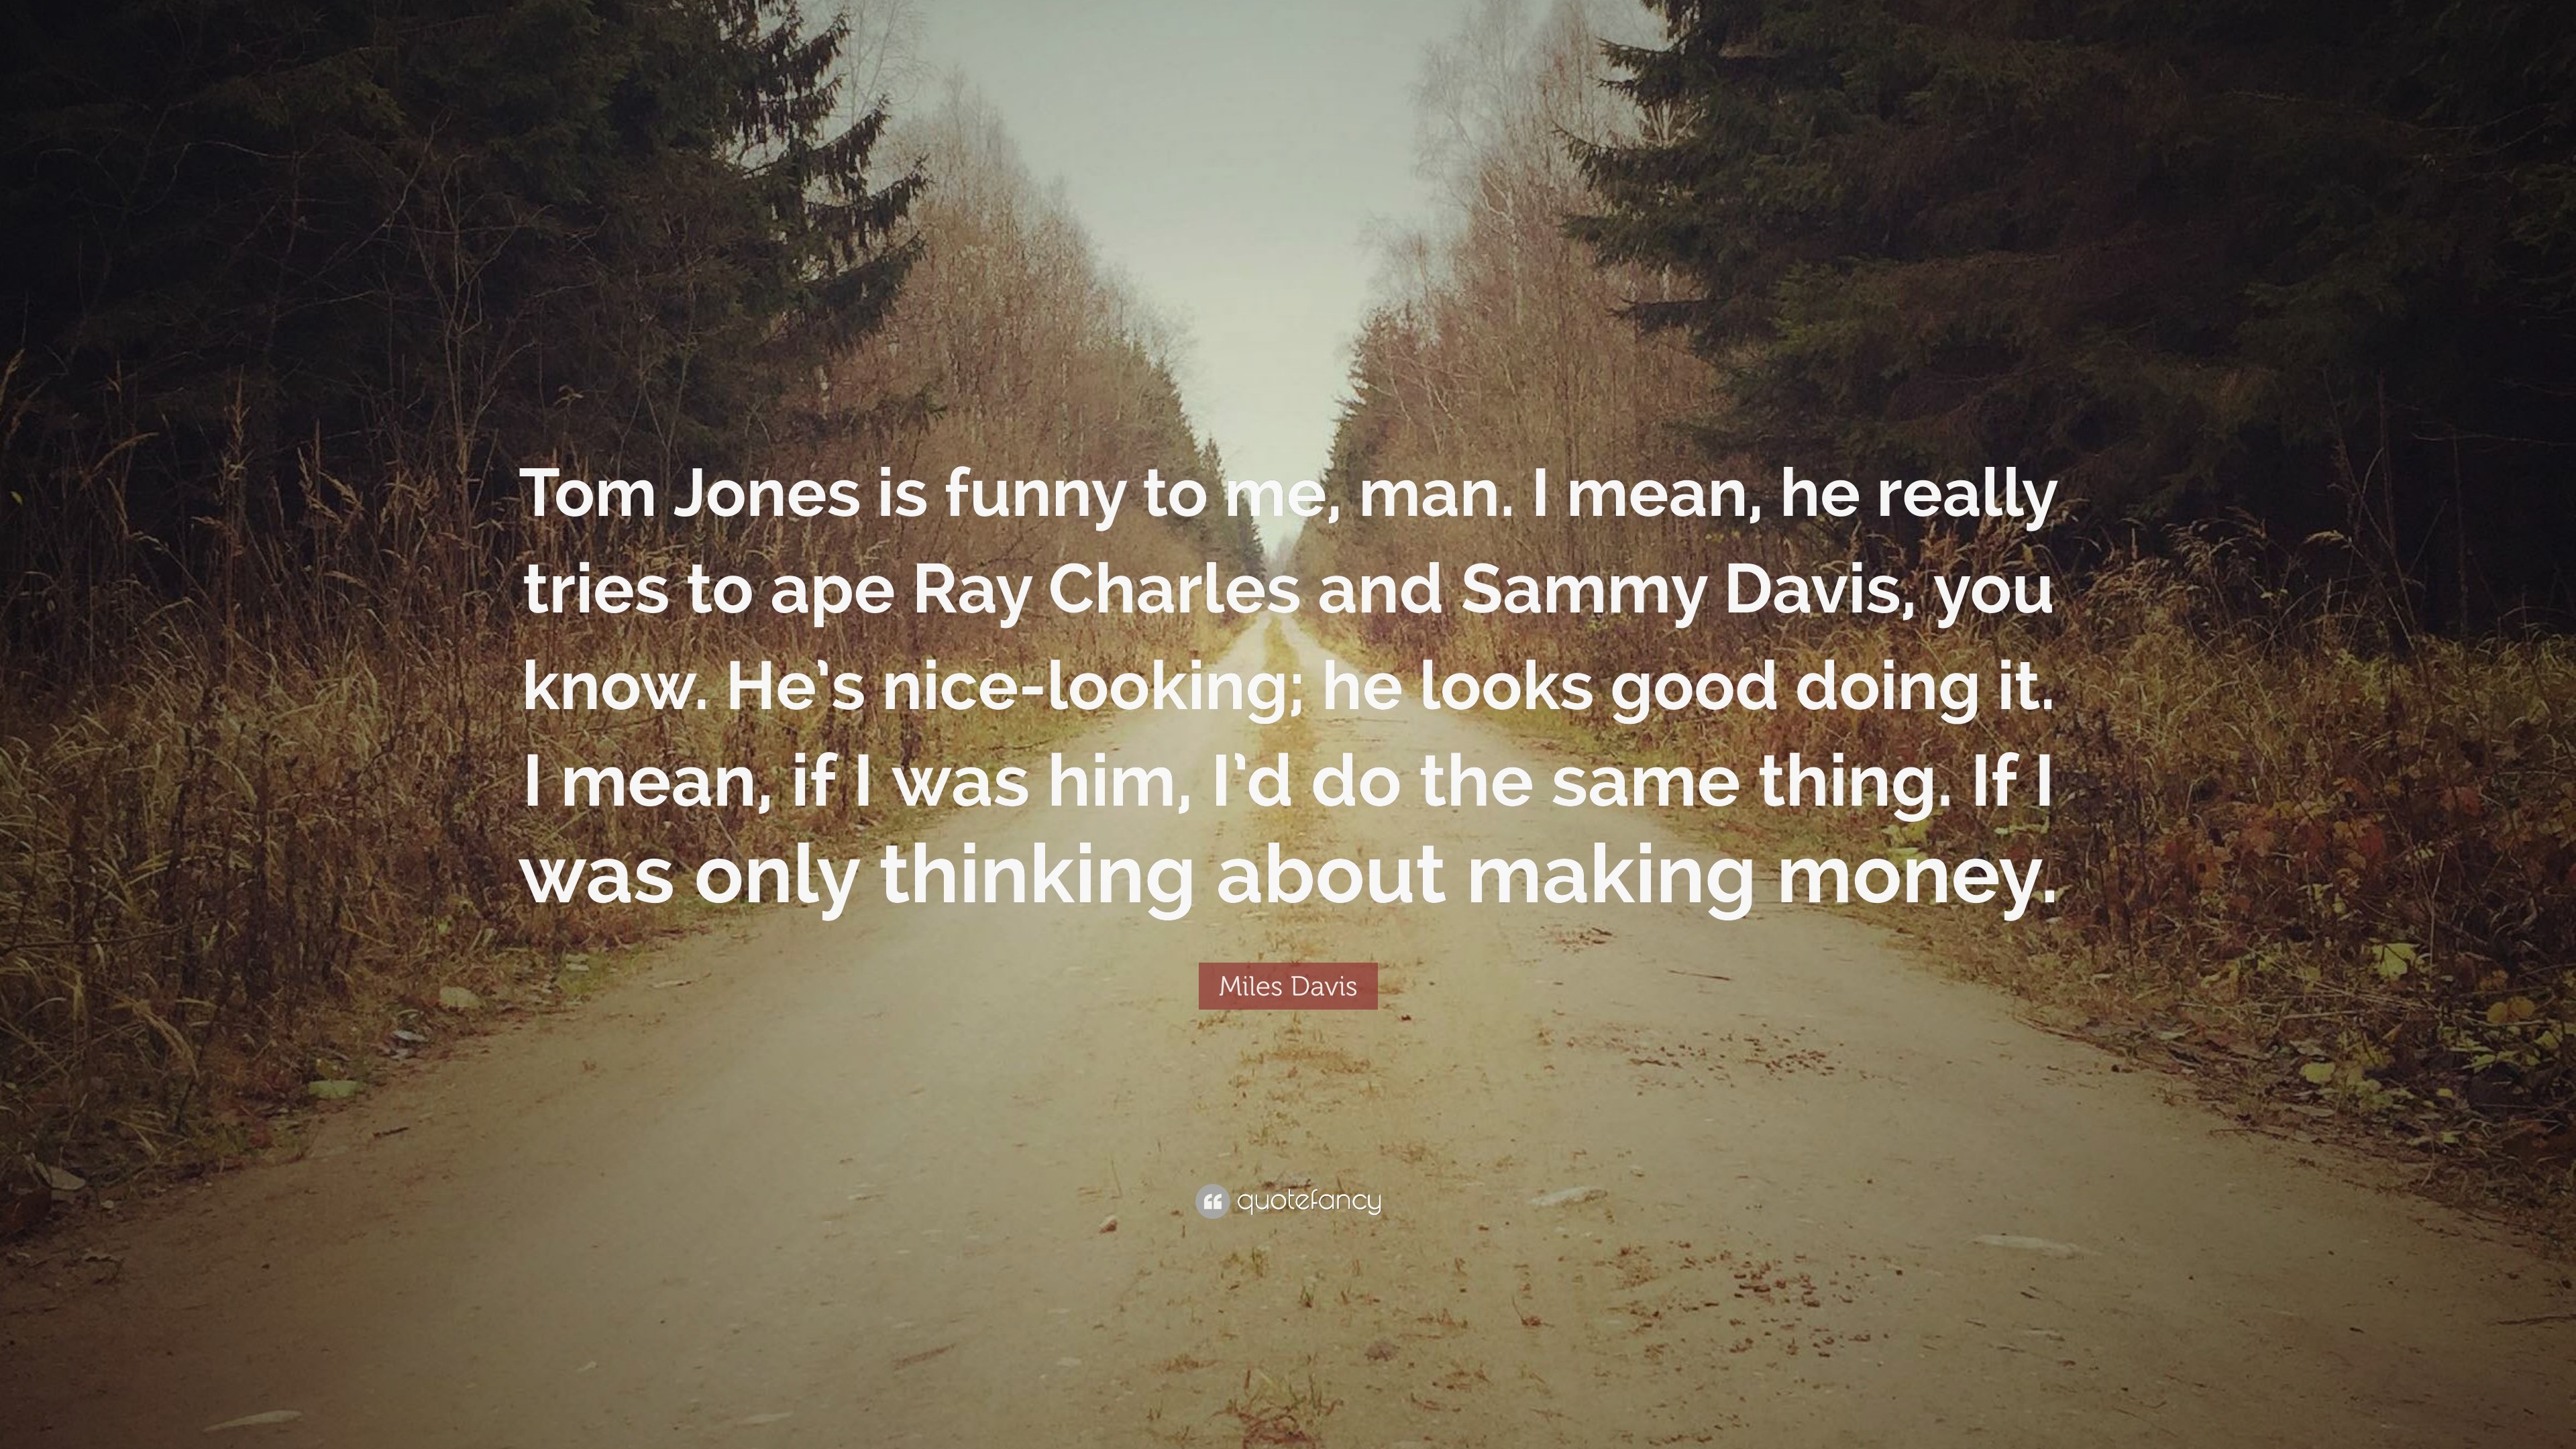 3840x2160 Miles Davis Quote: “Tom Jones is funny to me, man. I mean